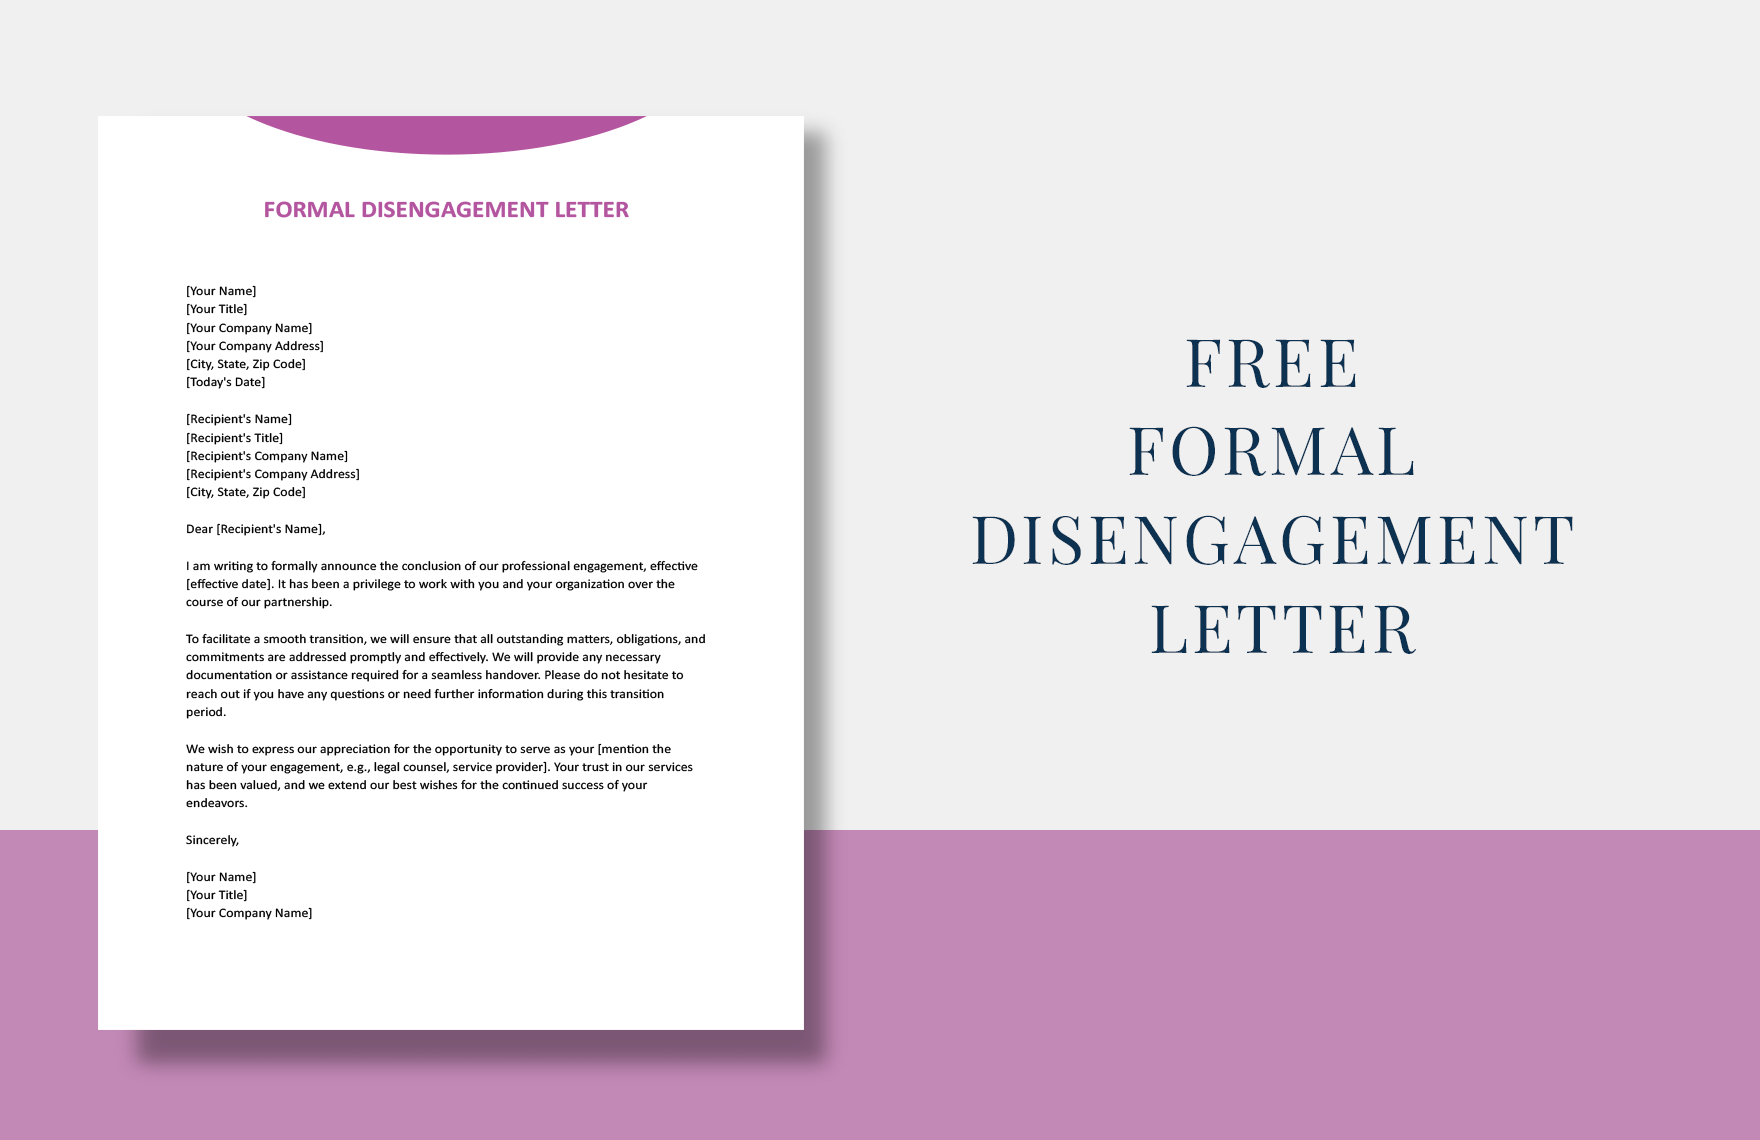 Formal Disengagement Letter